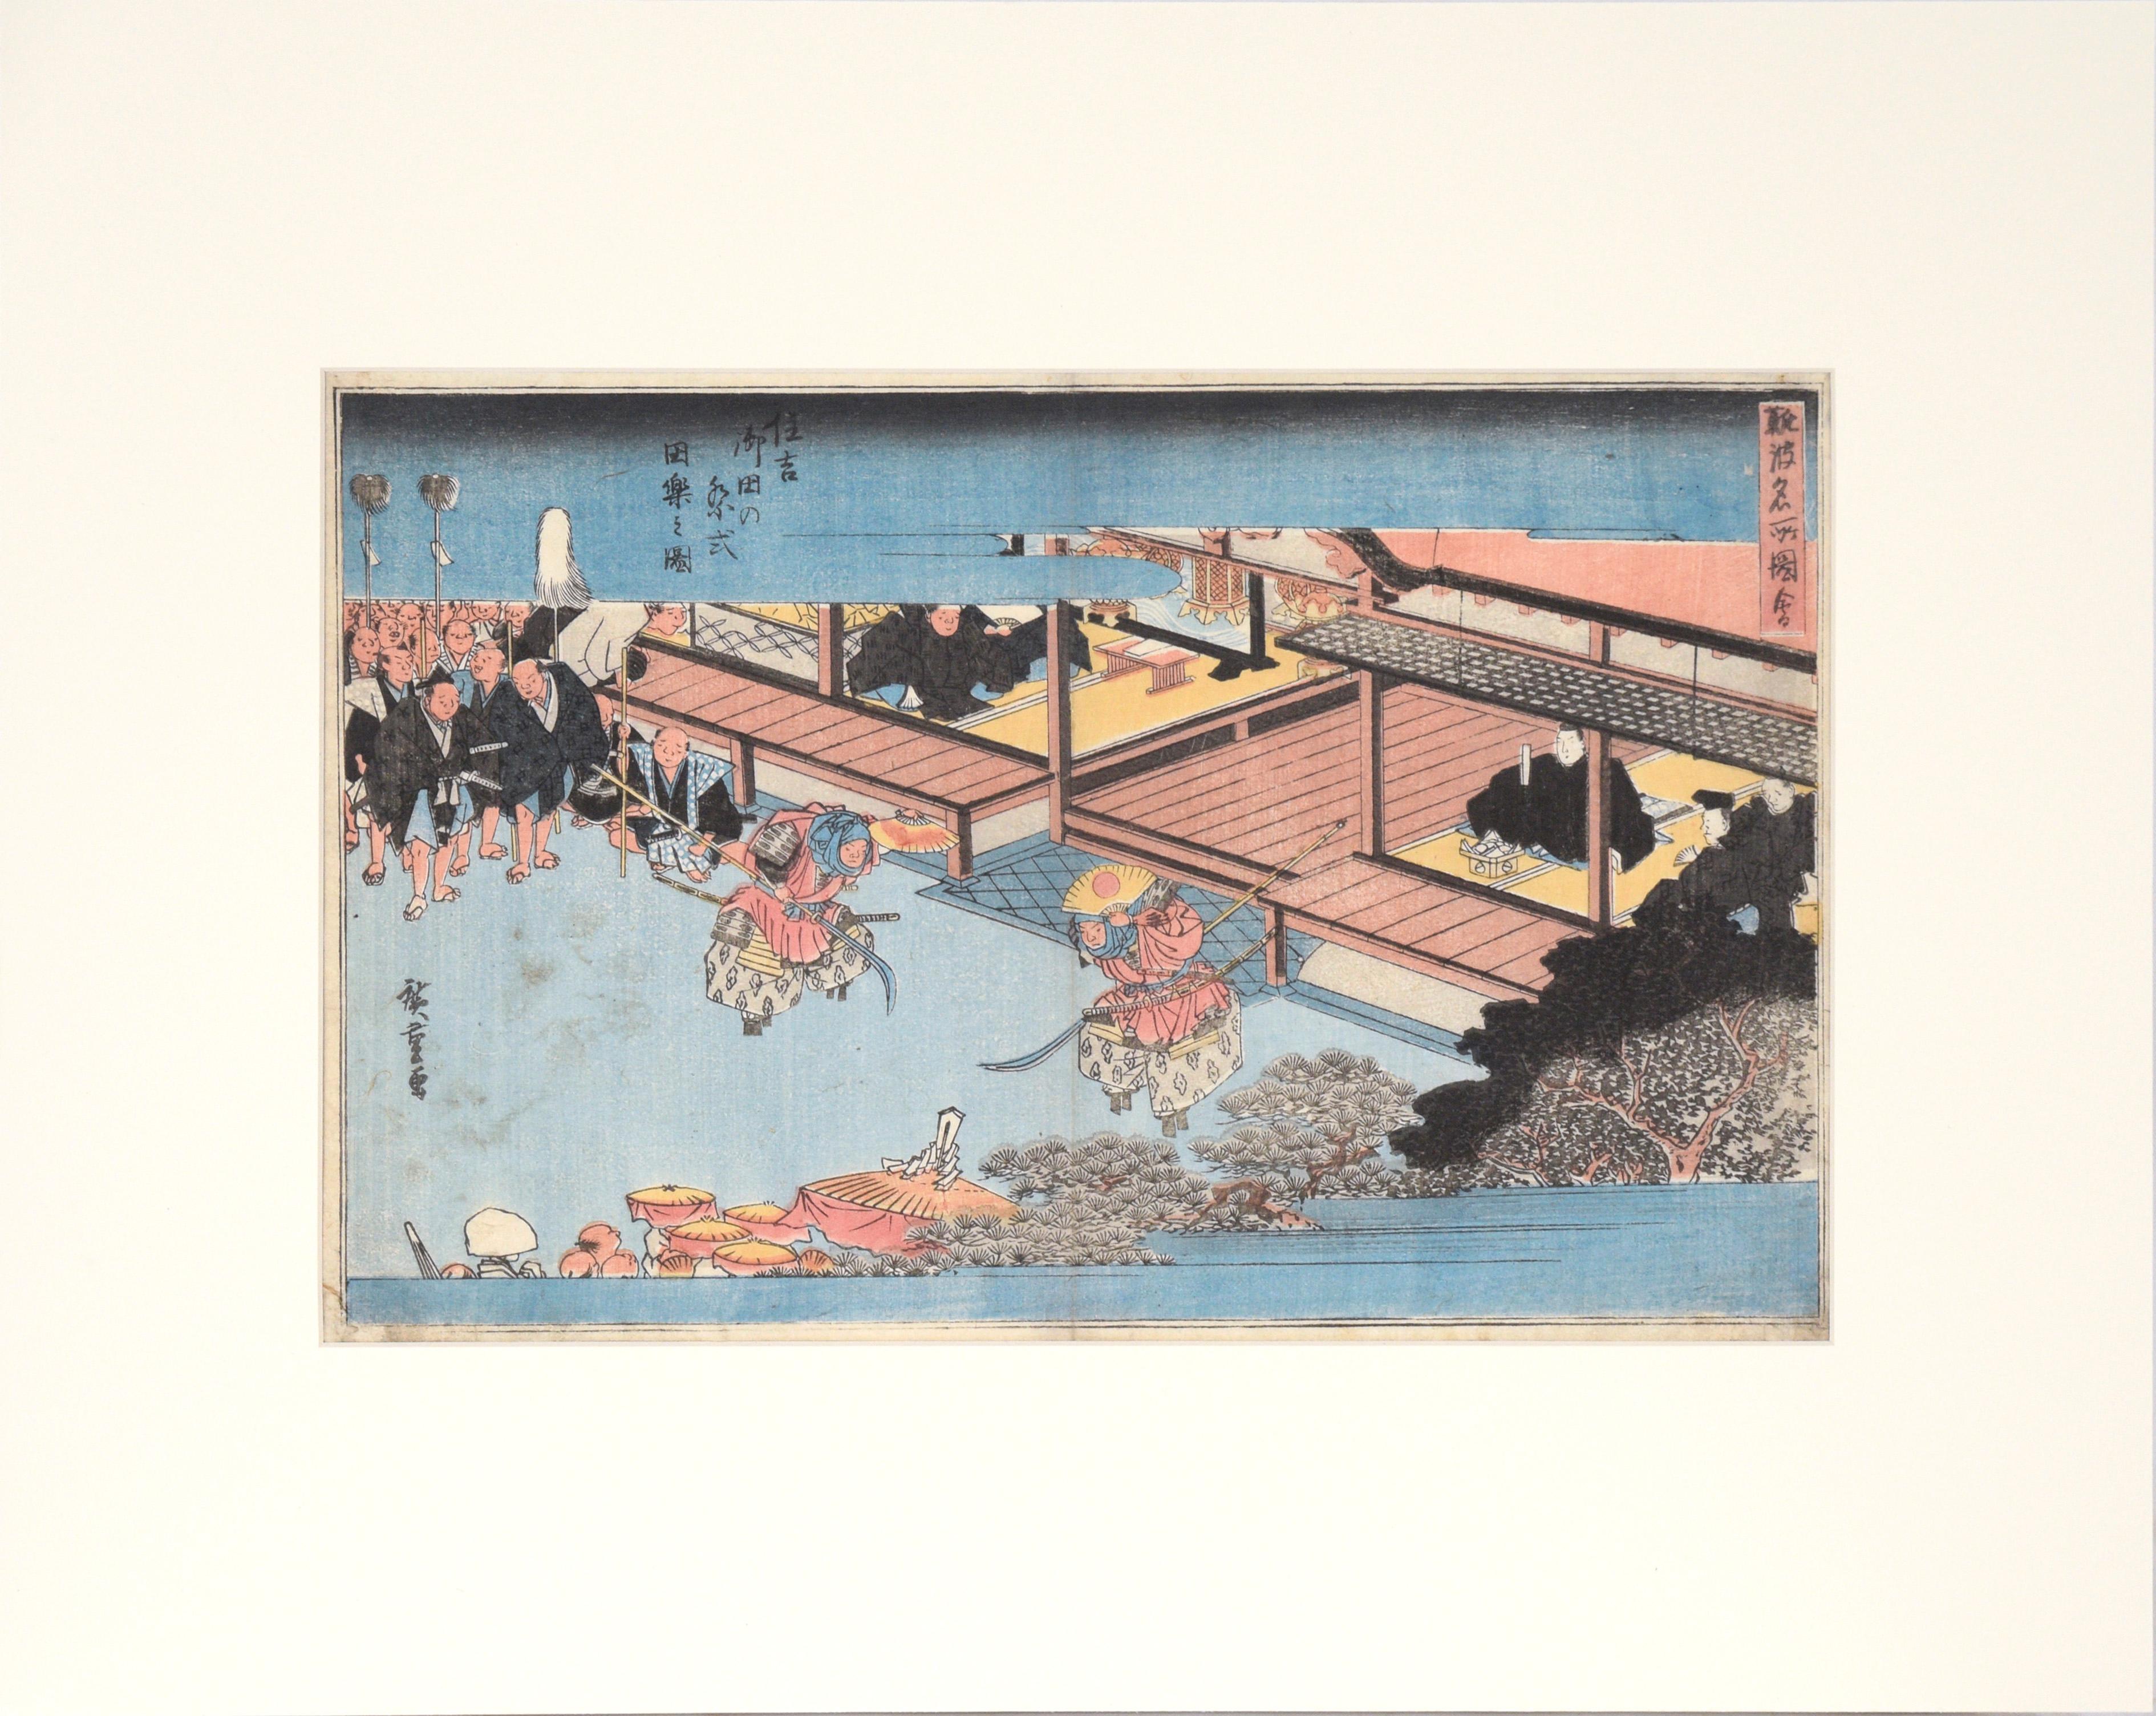 Utagawa Hiroshige Landscape Print - Sumiyoshi: Dengaku dance performed during an Onda ceremony - Woodblock Print